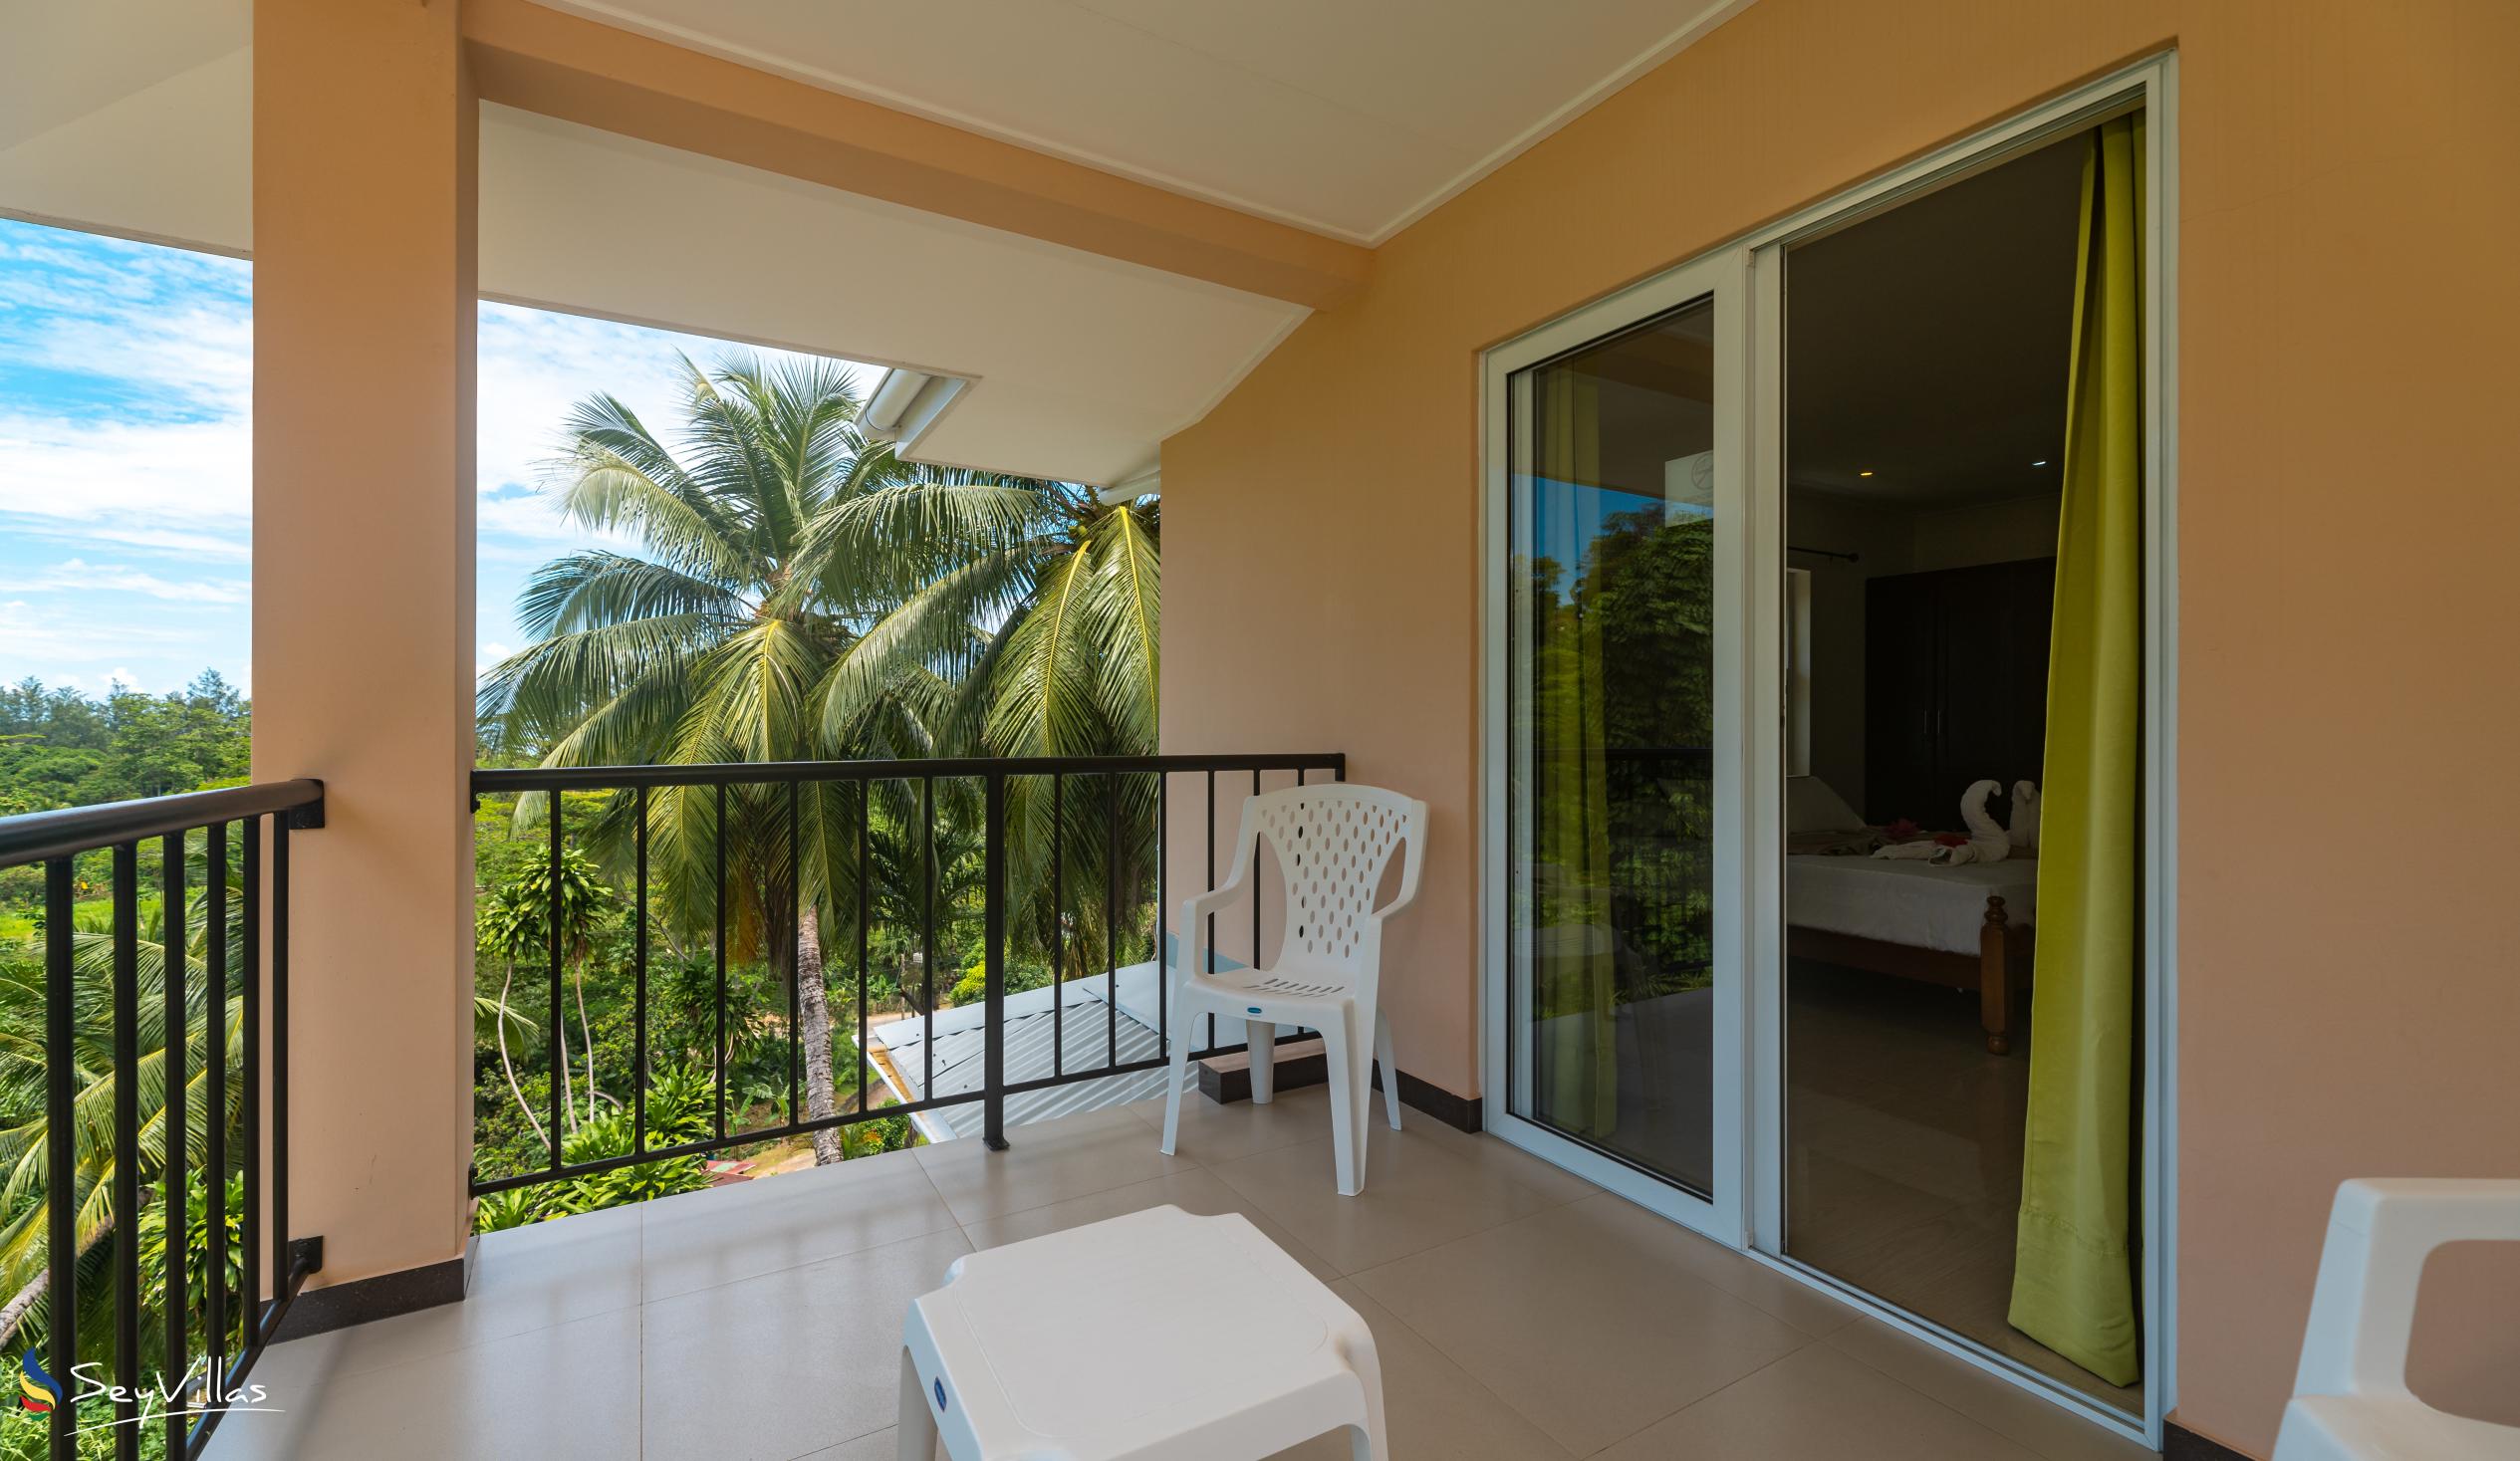 Foto 58: JAIDSS Holiday Apartments - Appartamento con 2 camere - Mahé (Seychelles)